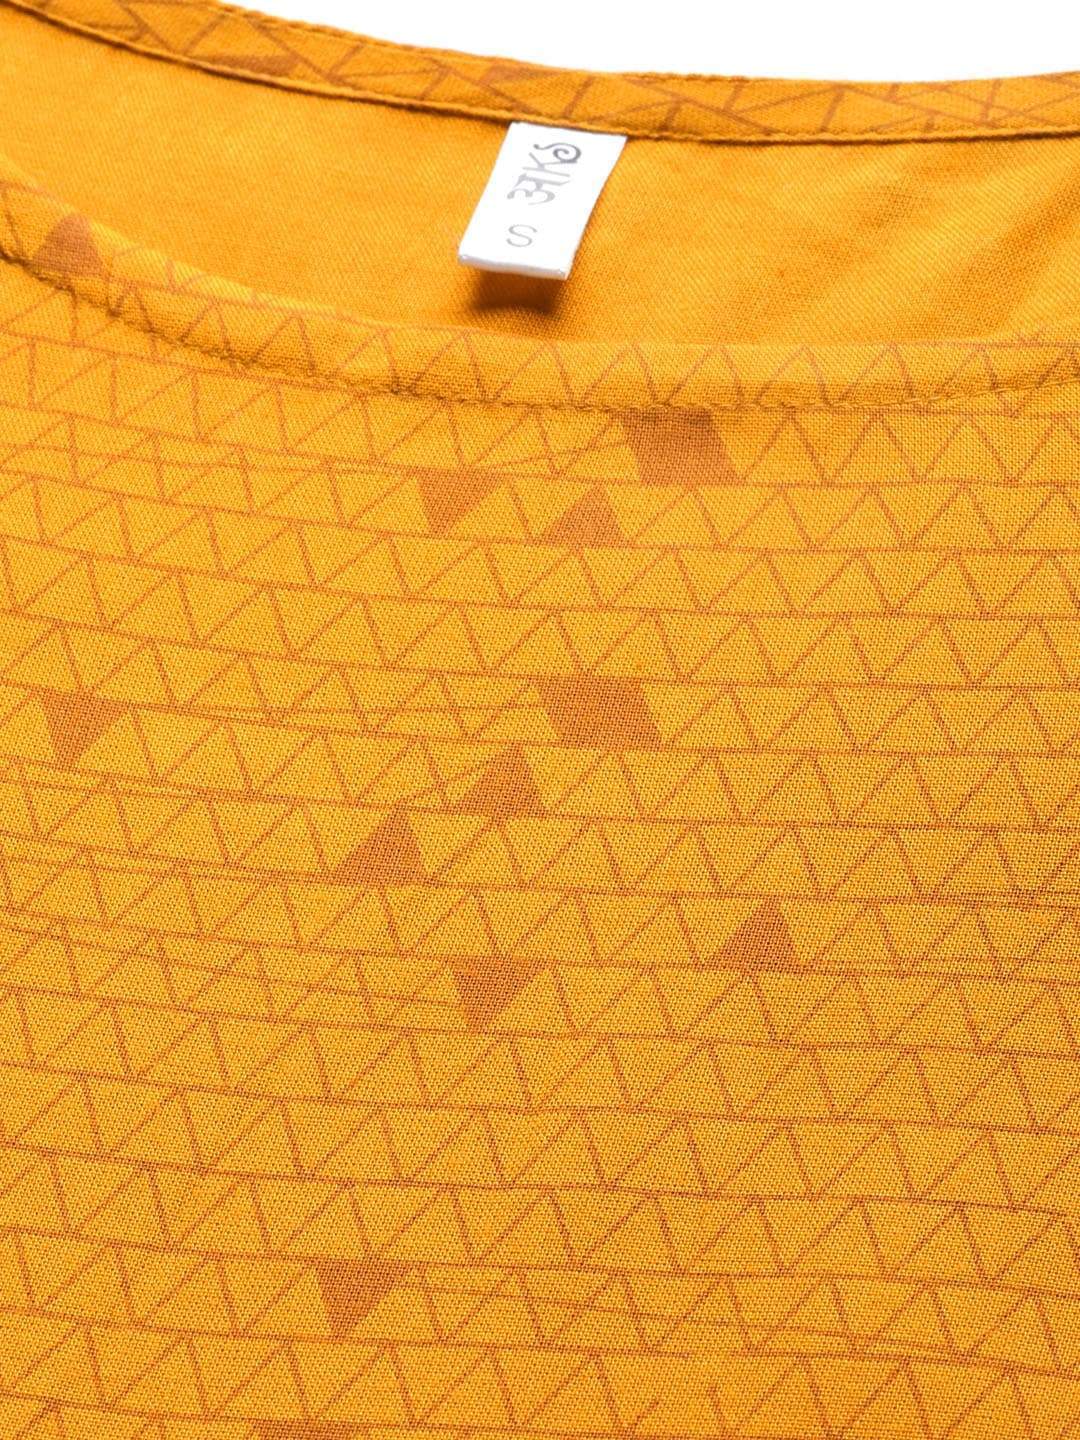 Women's  Mustard Yellow Printed Maxi Dress - AKS